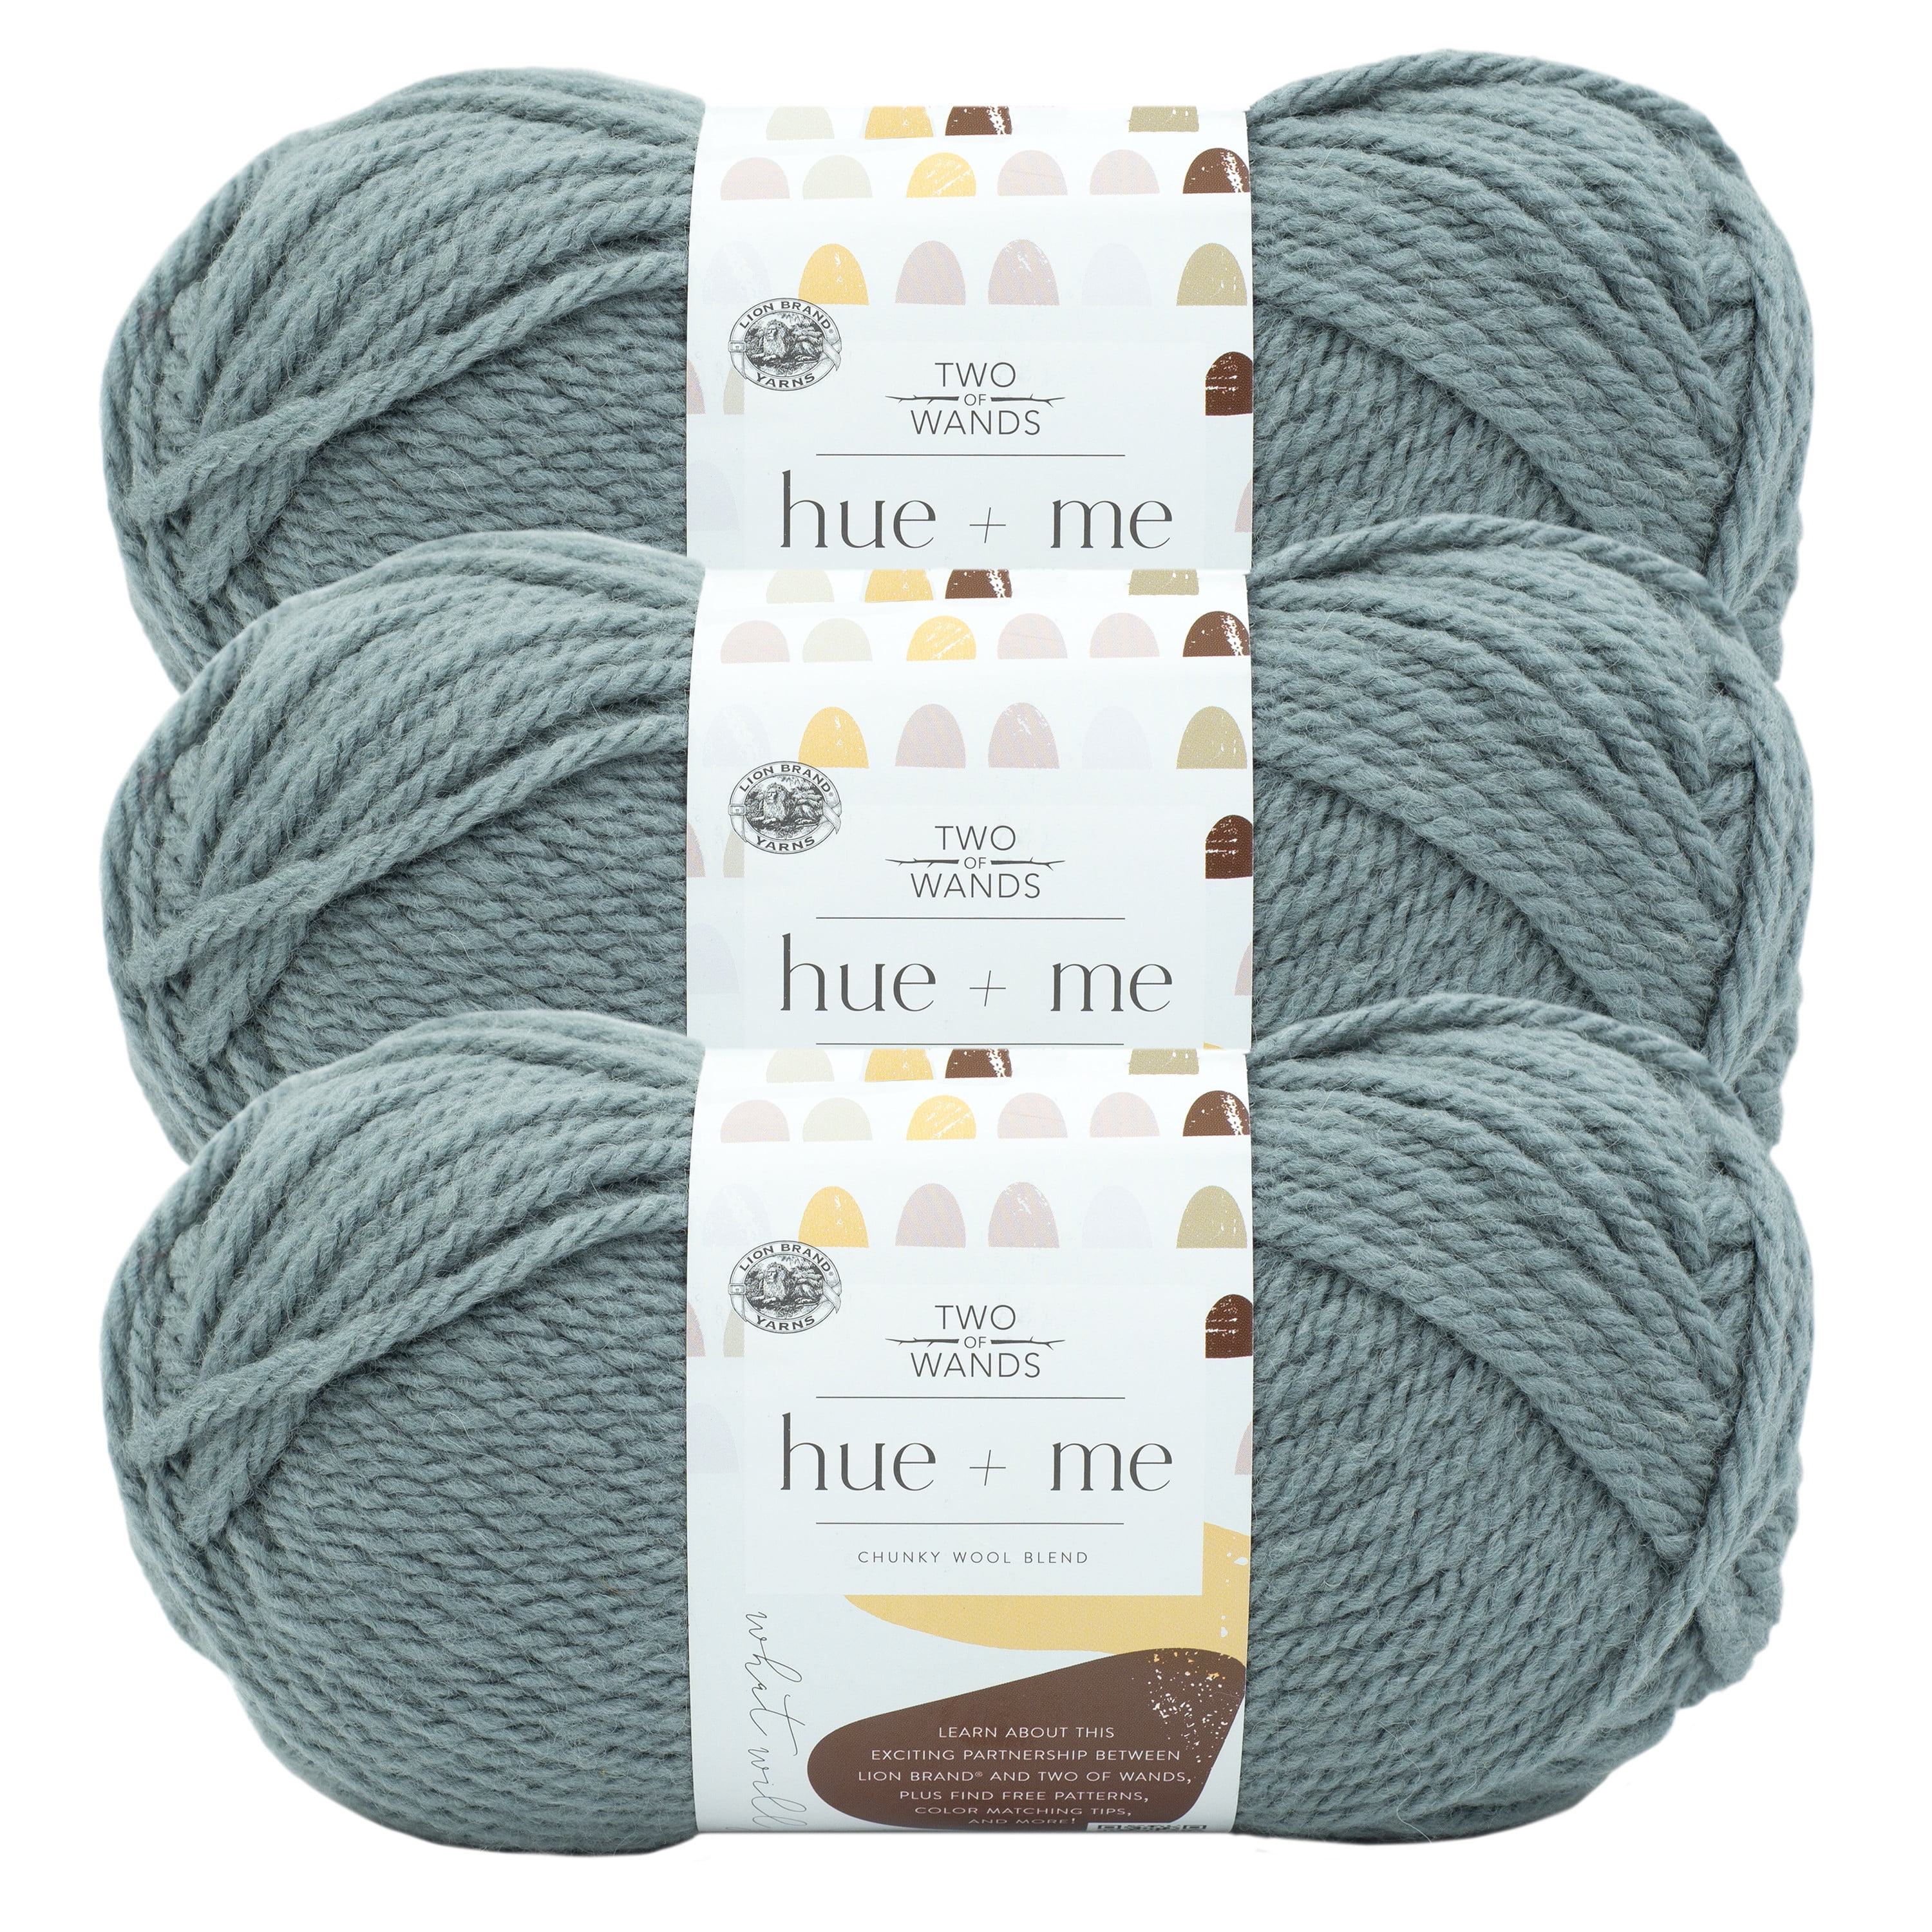 Hue & Me Yarn by Lion Brand